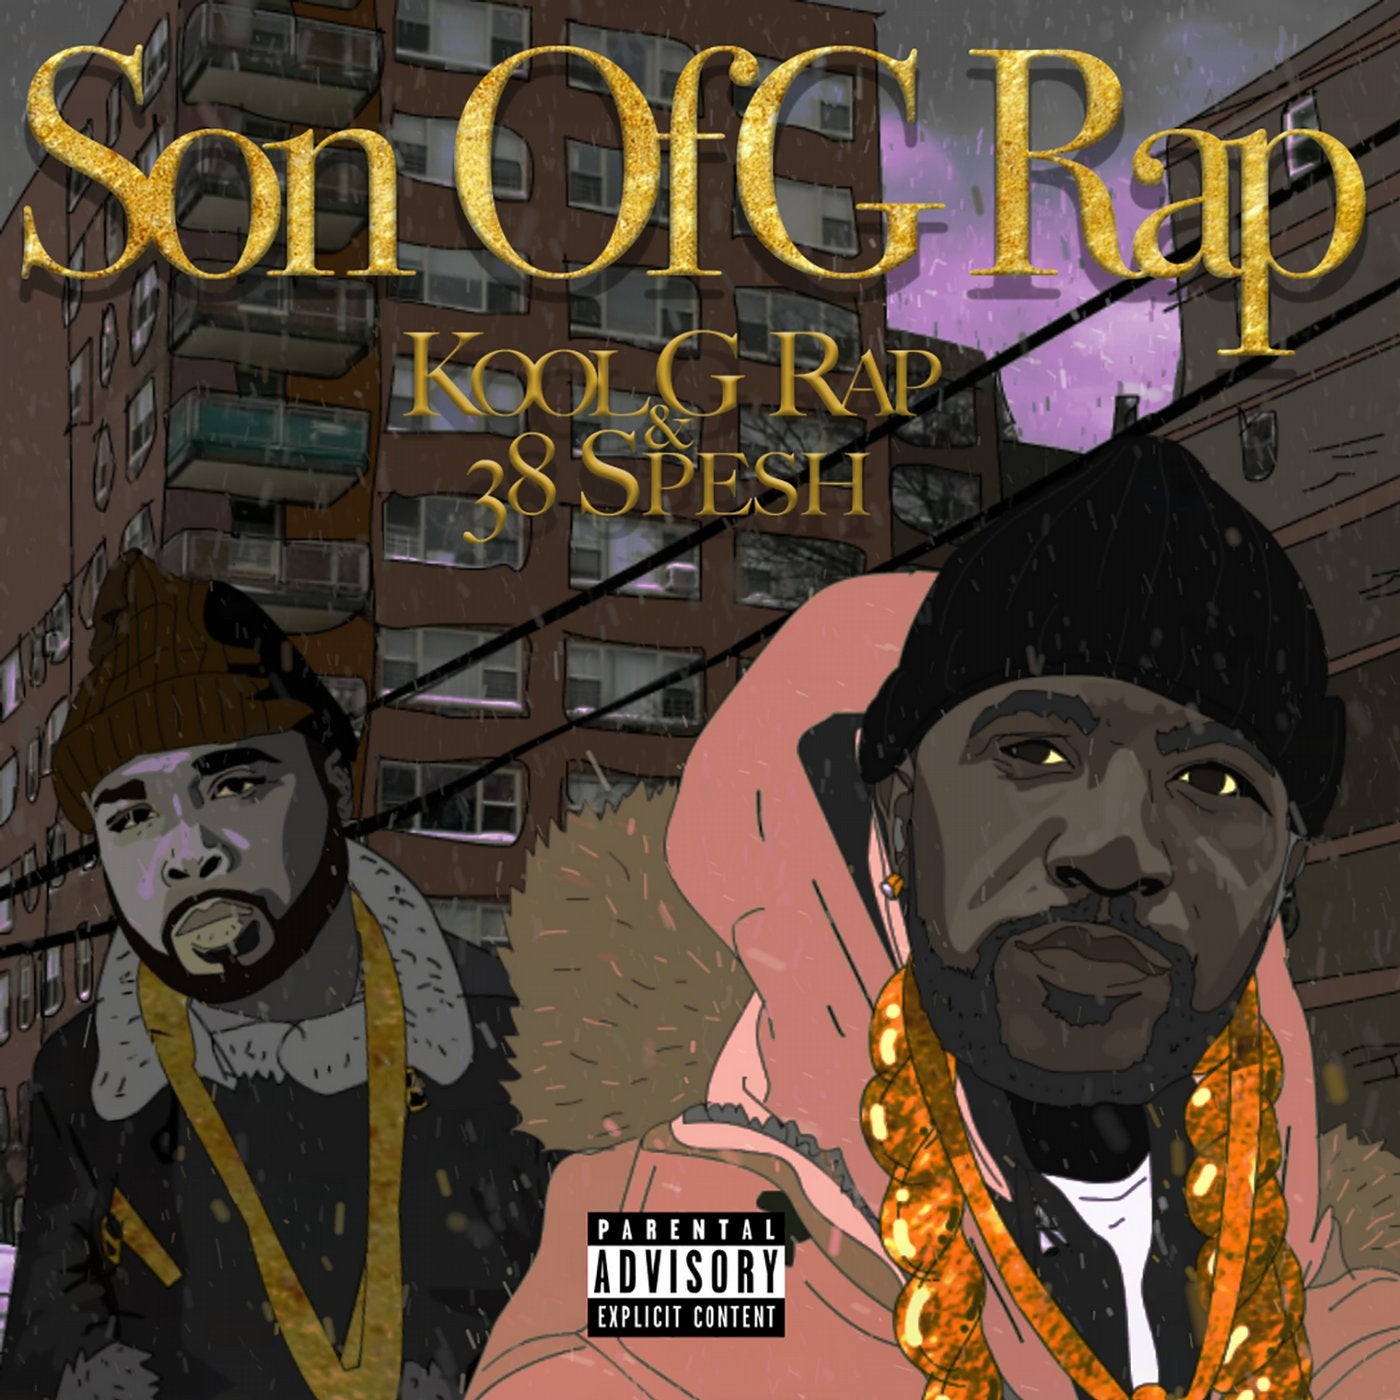 Kool G Rap Music & Downloads on Beatport